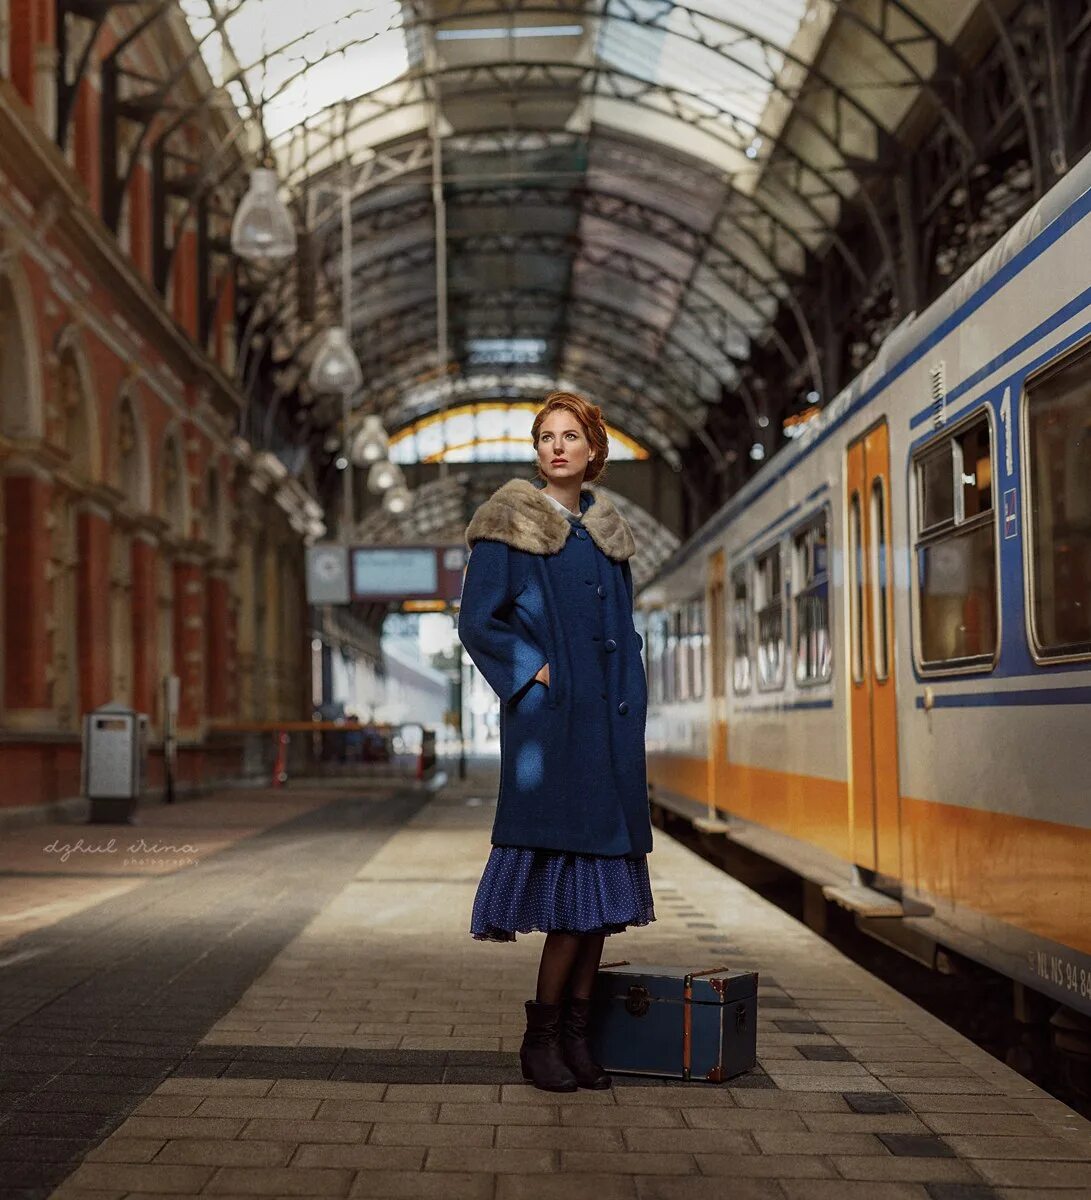 Образ железной дороги. Девушка на вокзале. Фотосессия в метро. Девушка на вокзале с чемоданом.